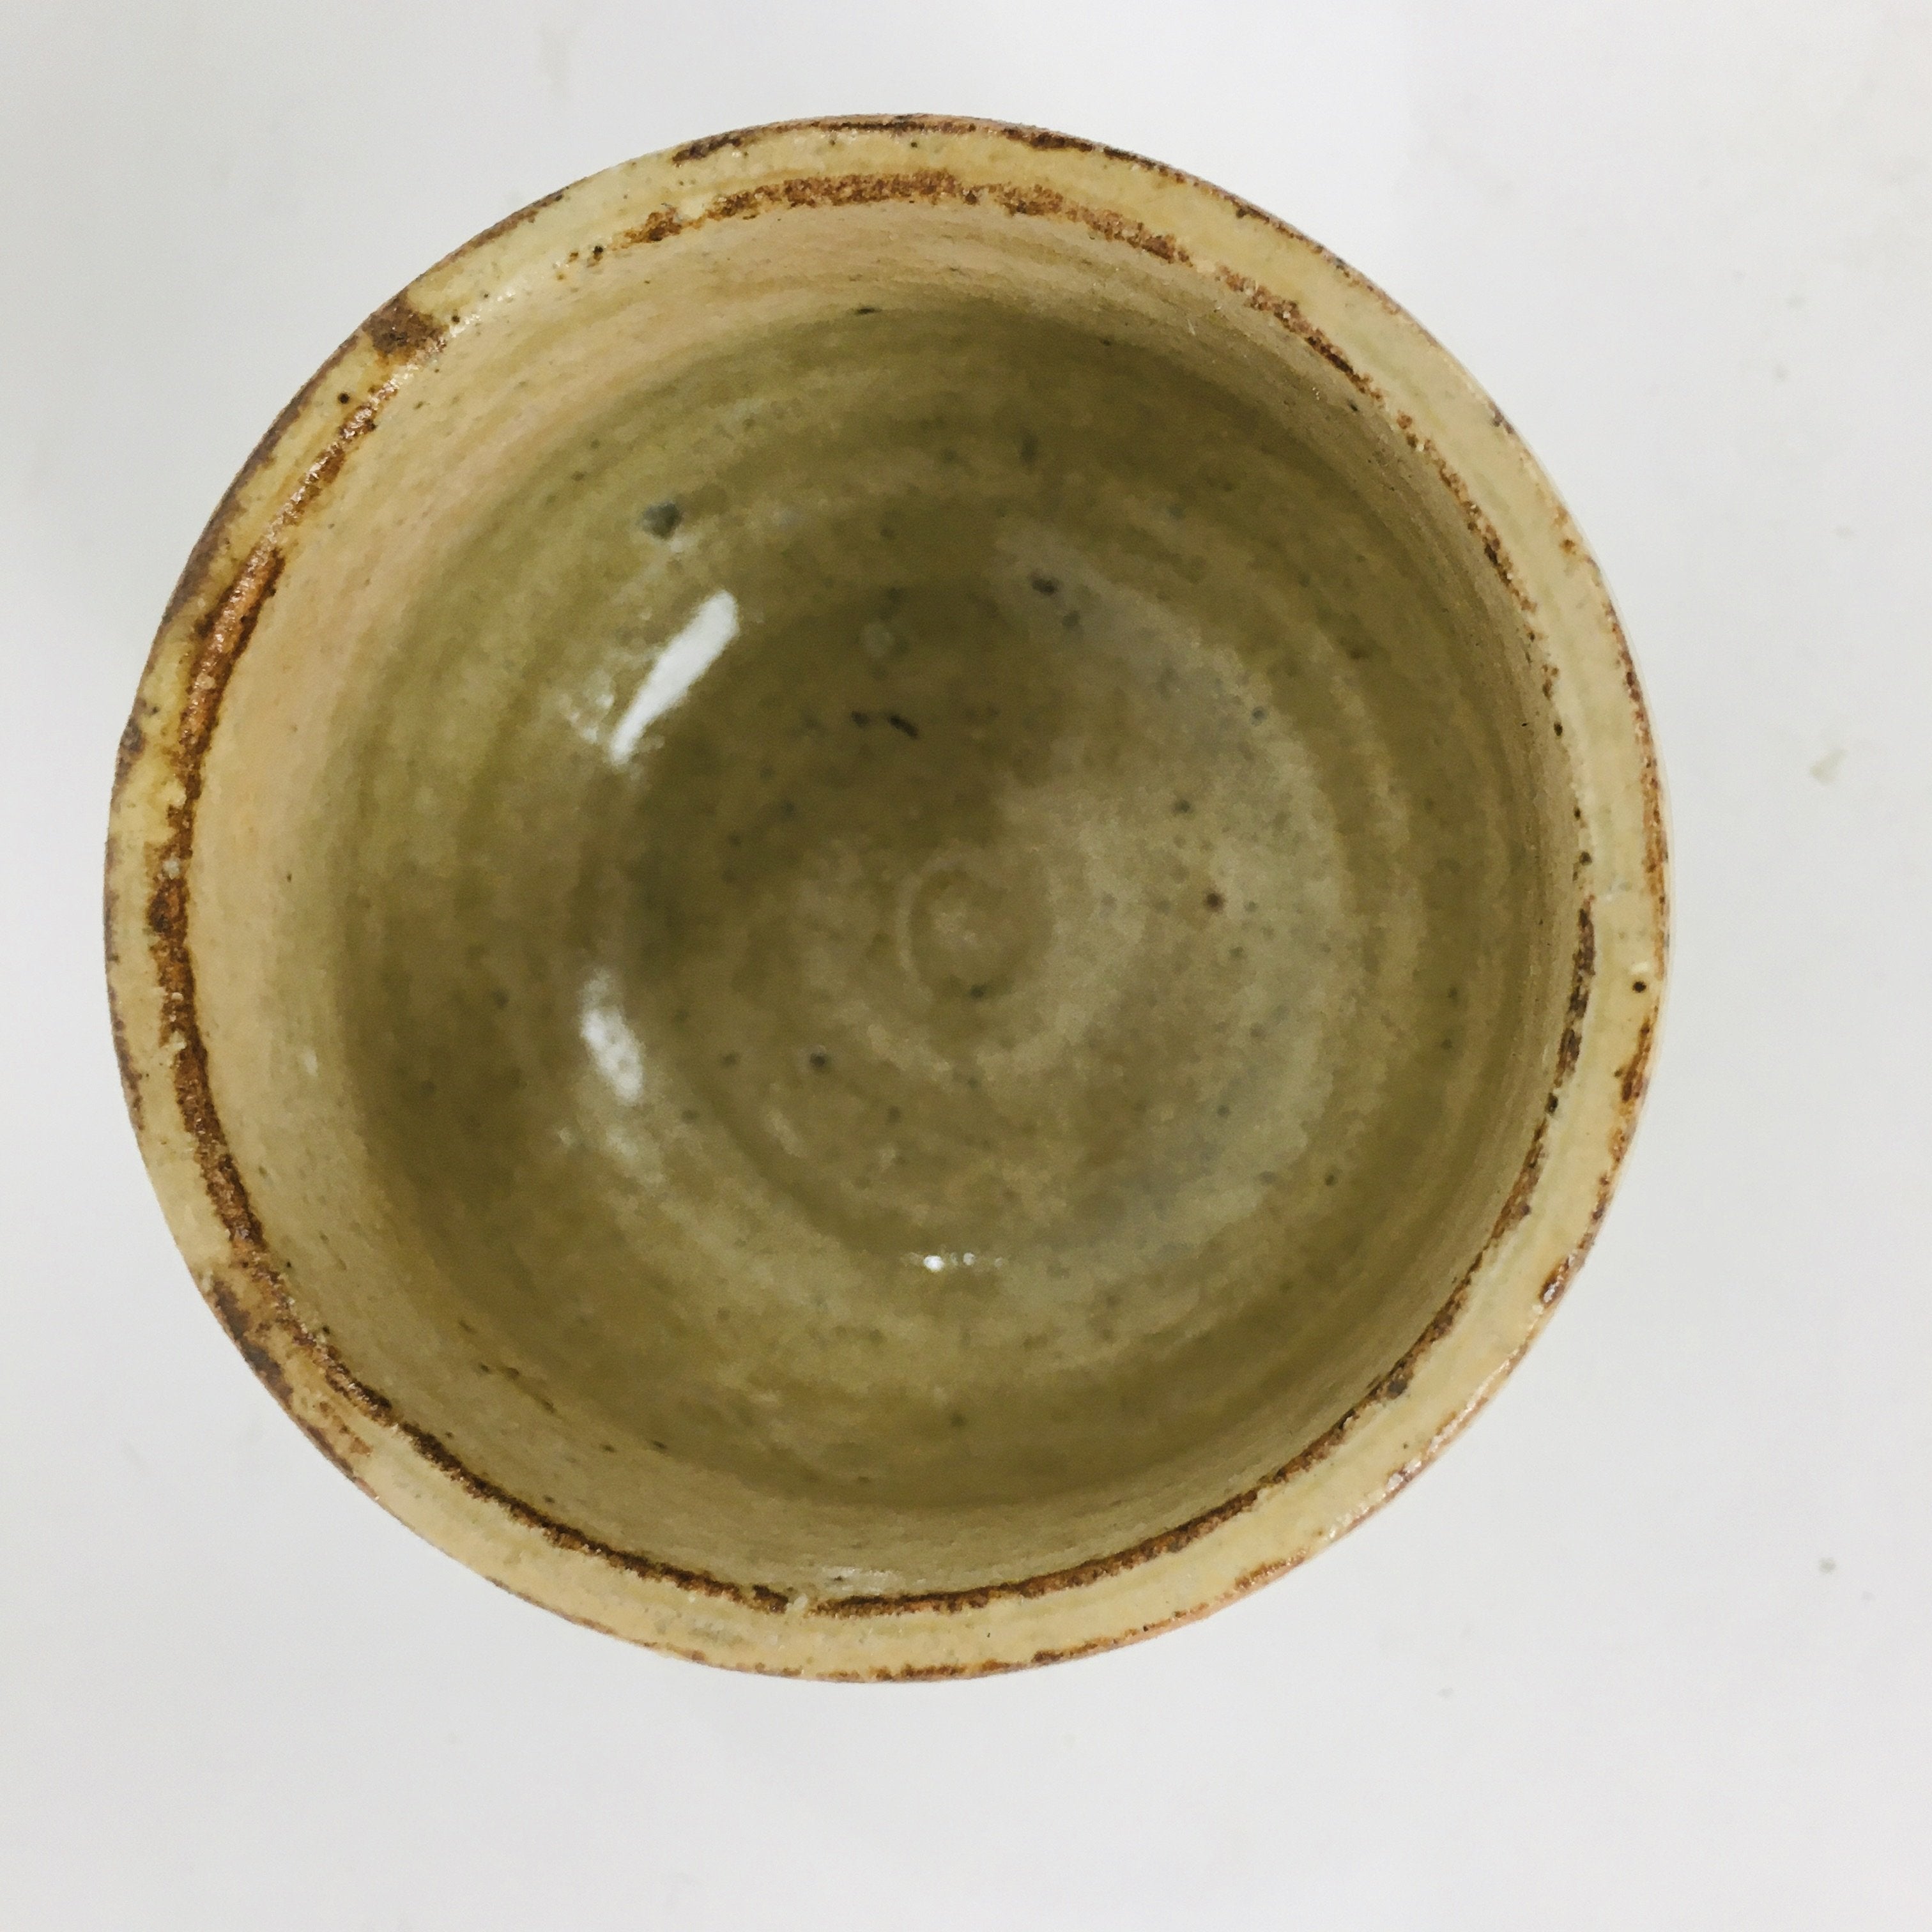 Japanese Ceramic Mino Ware Sake Cup Vtg Guinomi Ochoko Beige Brown GU924